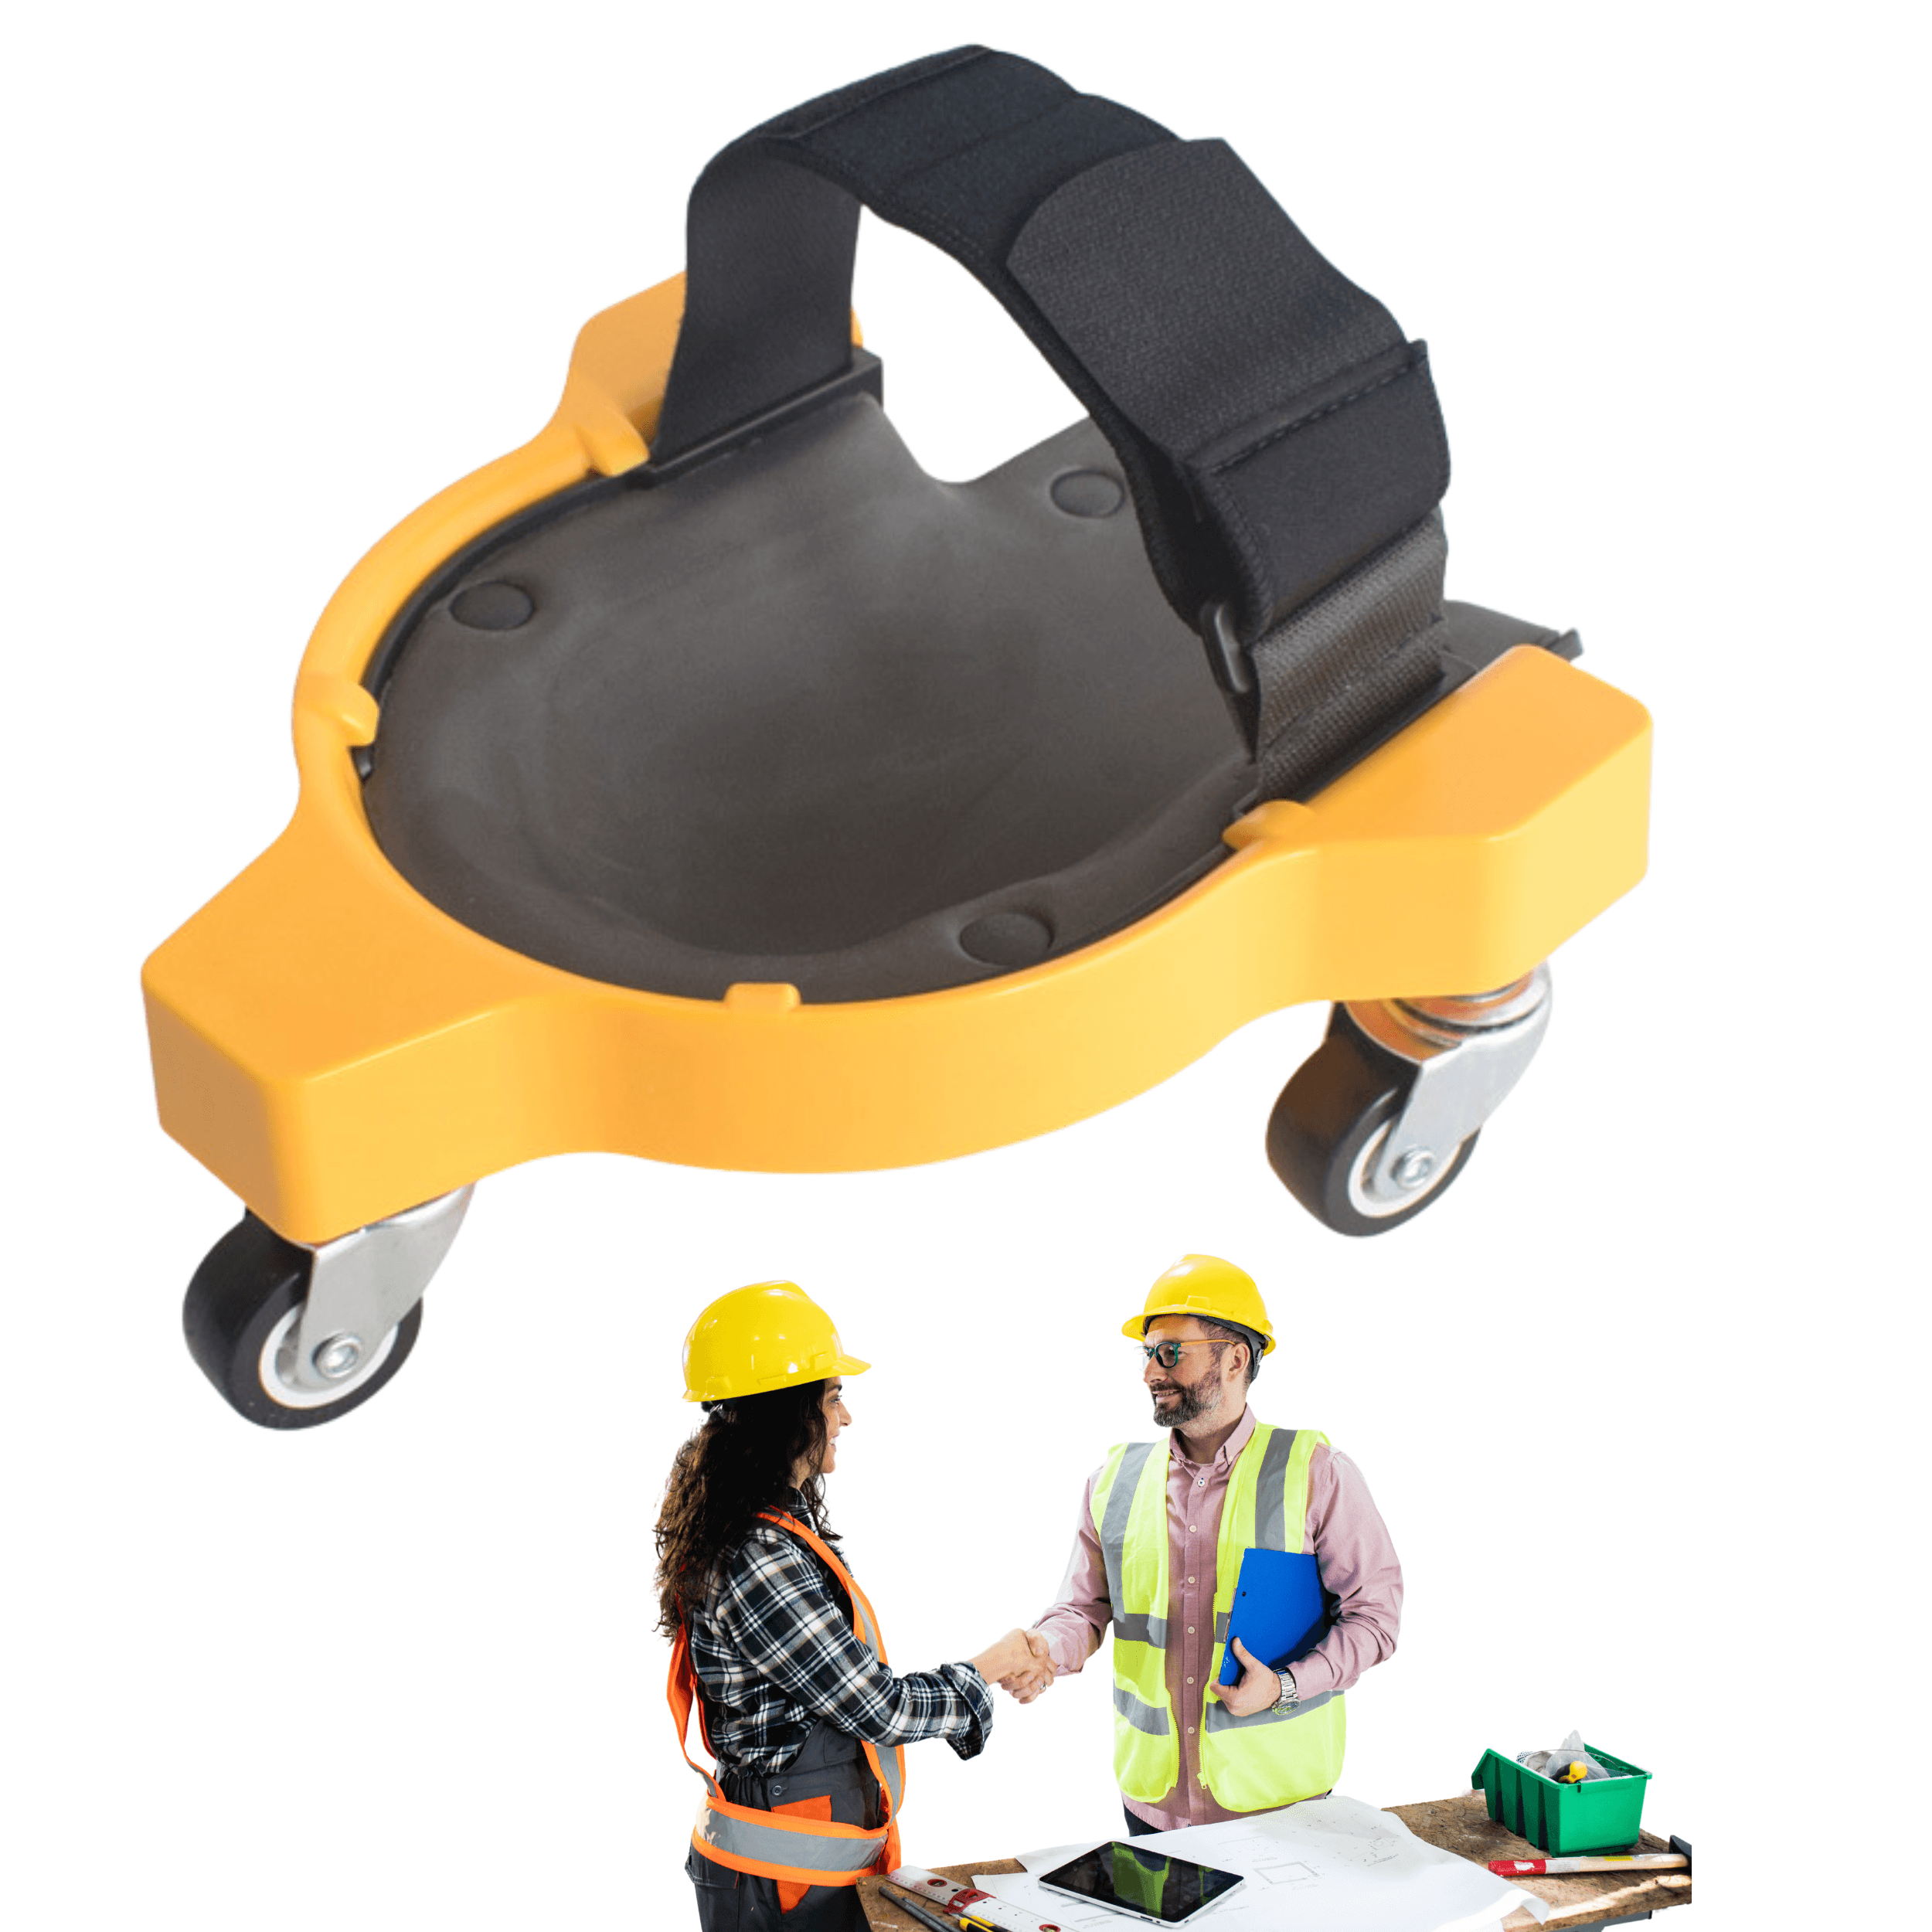 Multifunctional knee pads on wheels - yellow